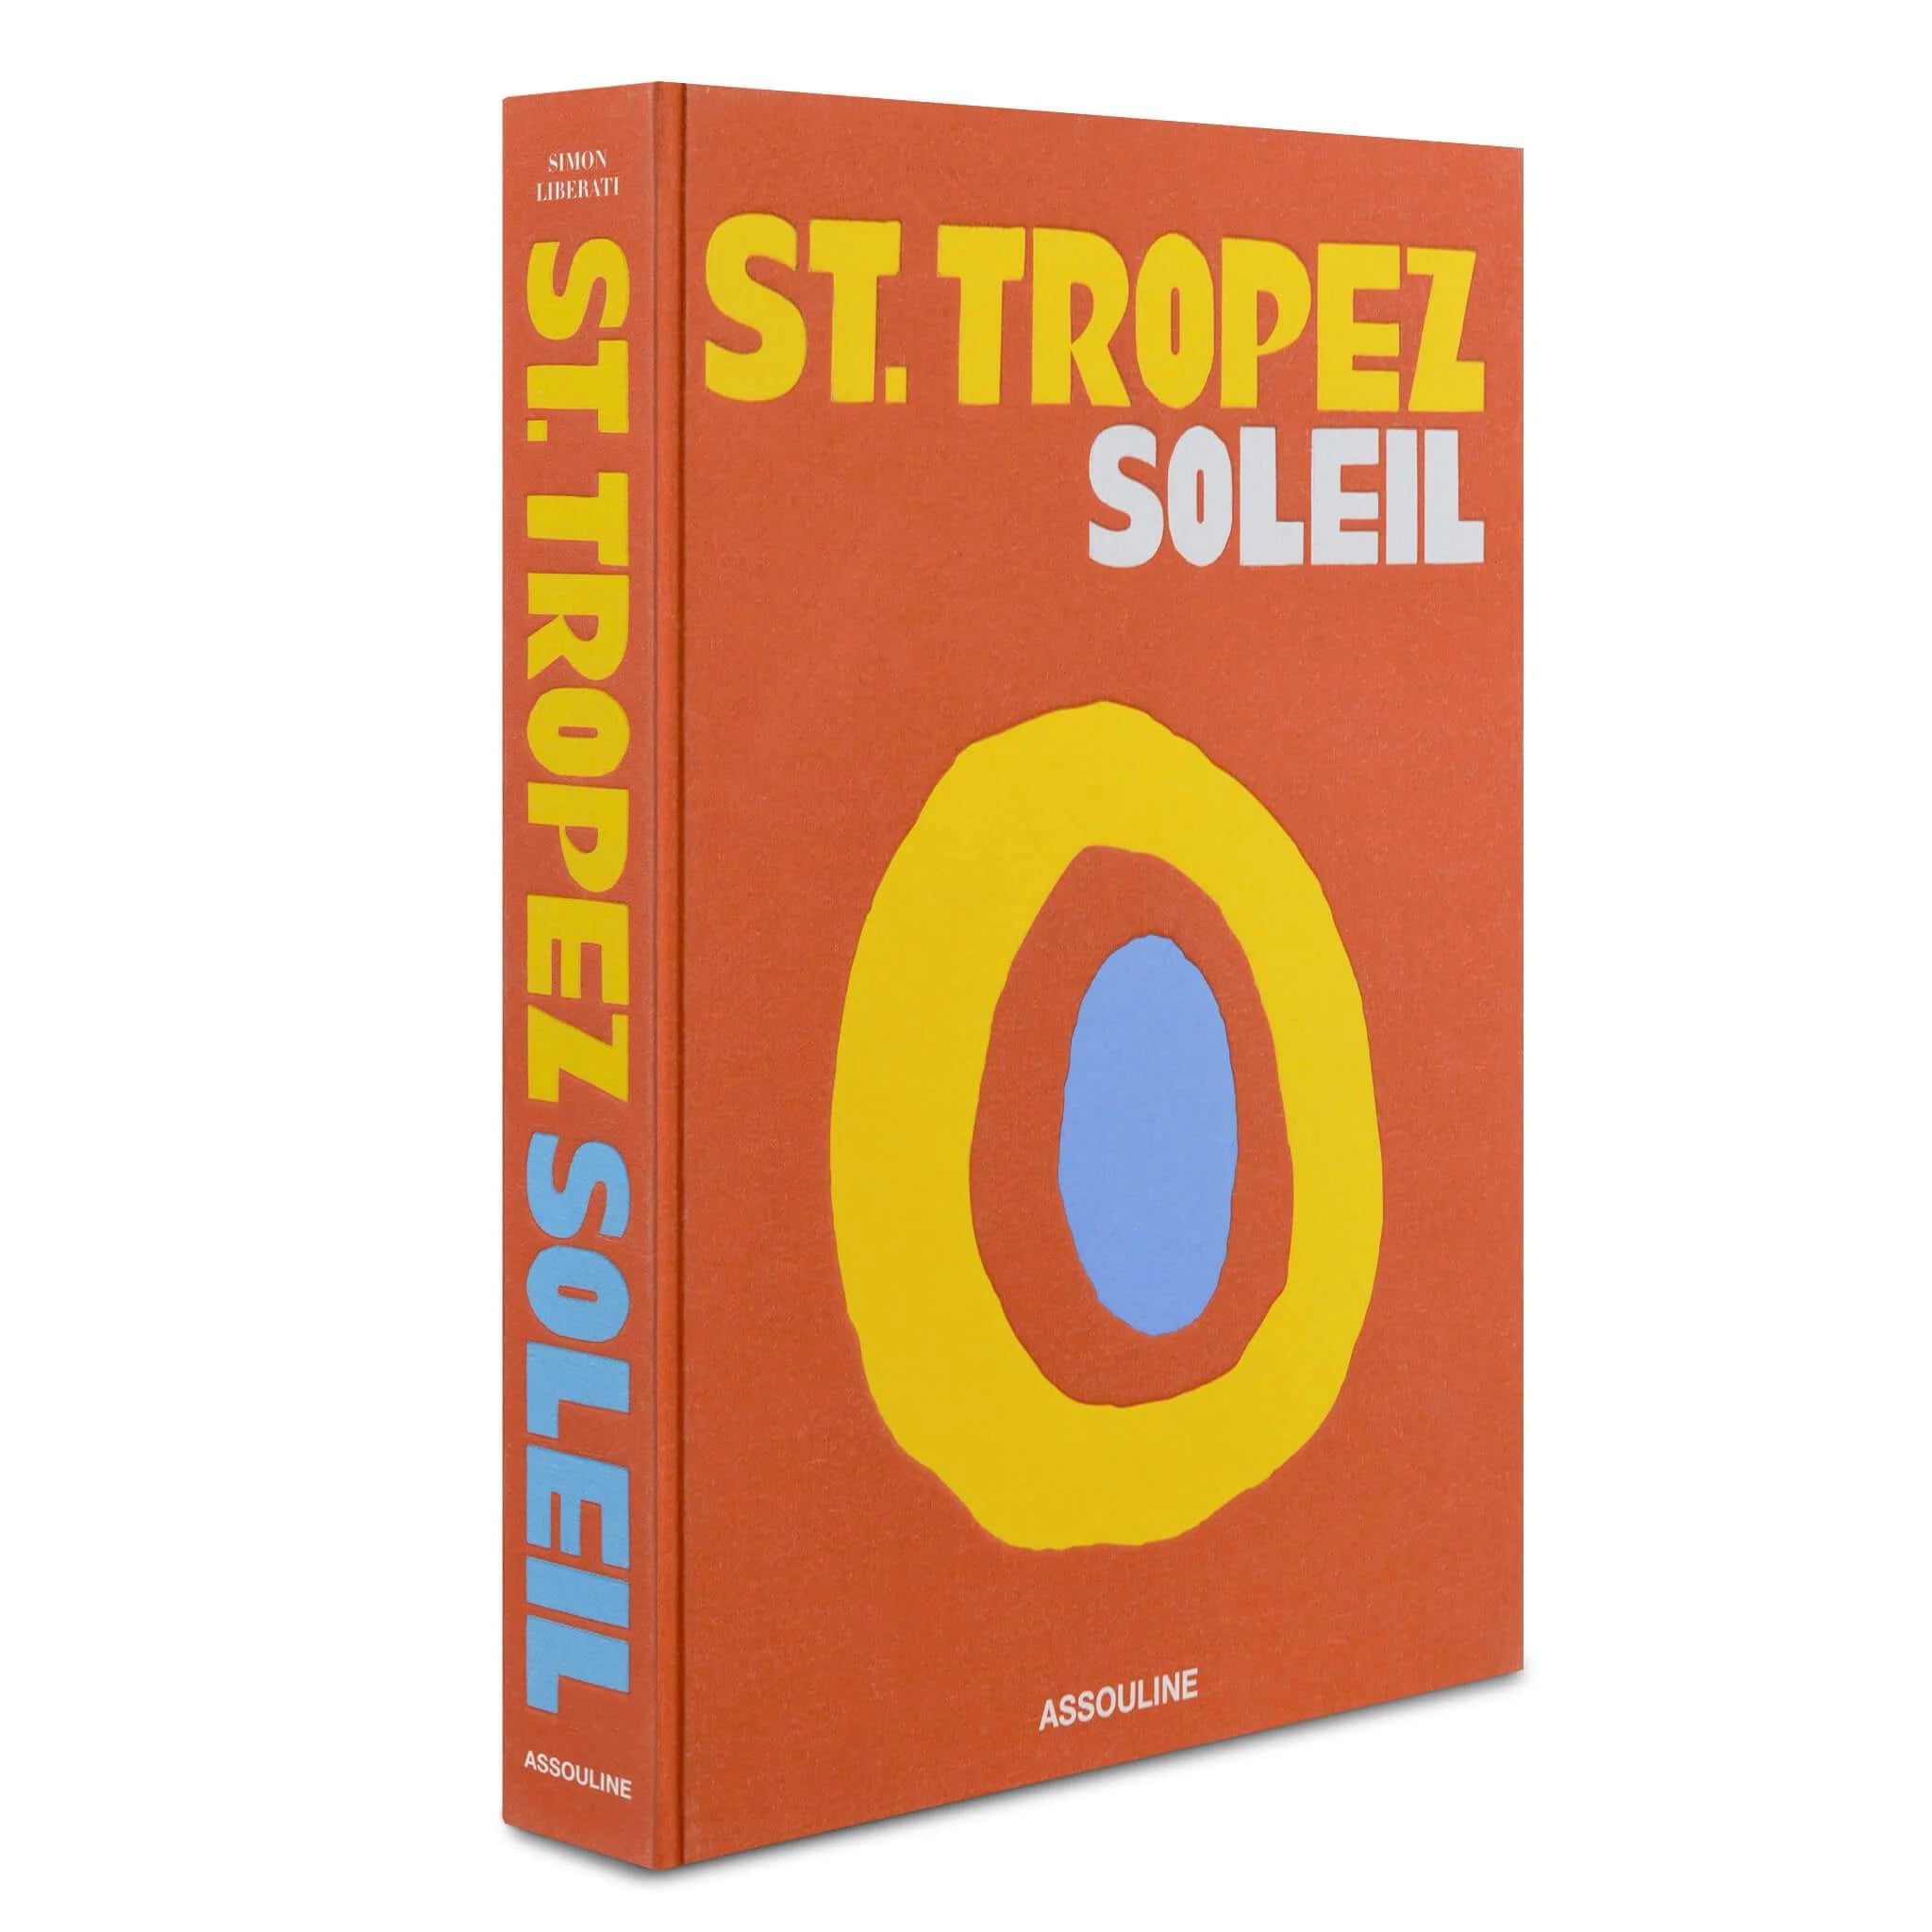 ST TROPEZ SOLEIL, coffee table book sobre viajes de la editorial de lujo de Assouline